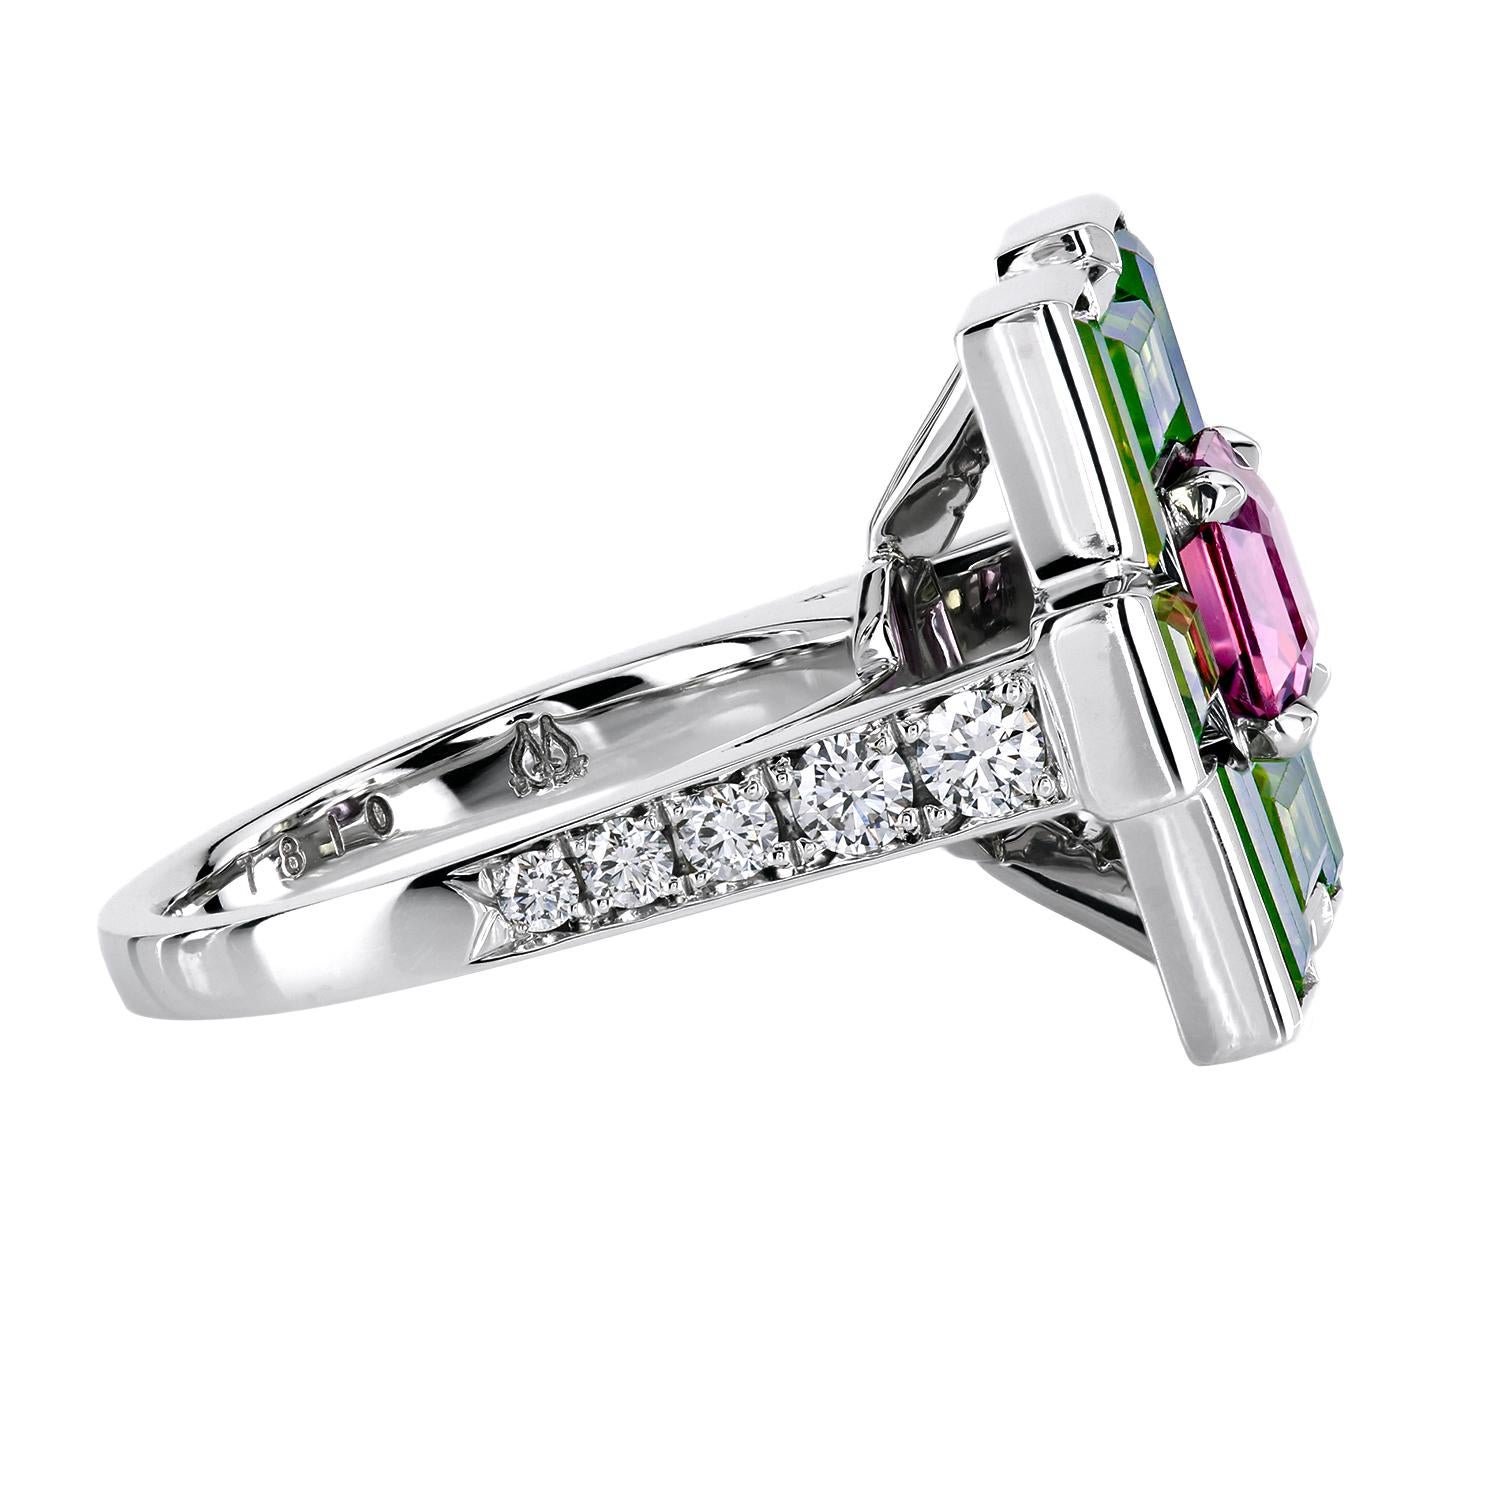 Art Nouveau Leon Mege Natural Pink and Olive Sapphires Diamond Platinum Ring For Sale